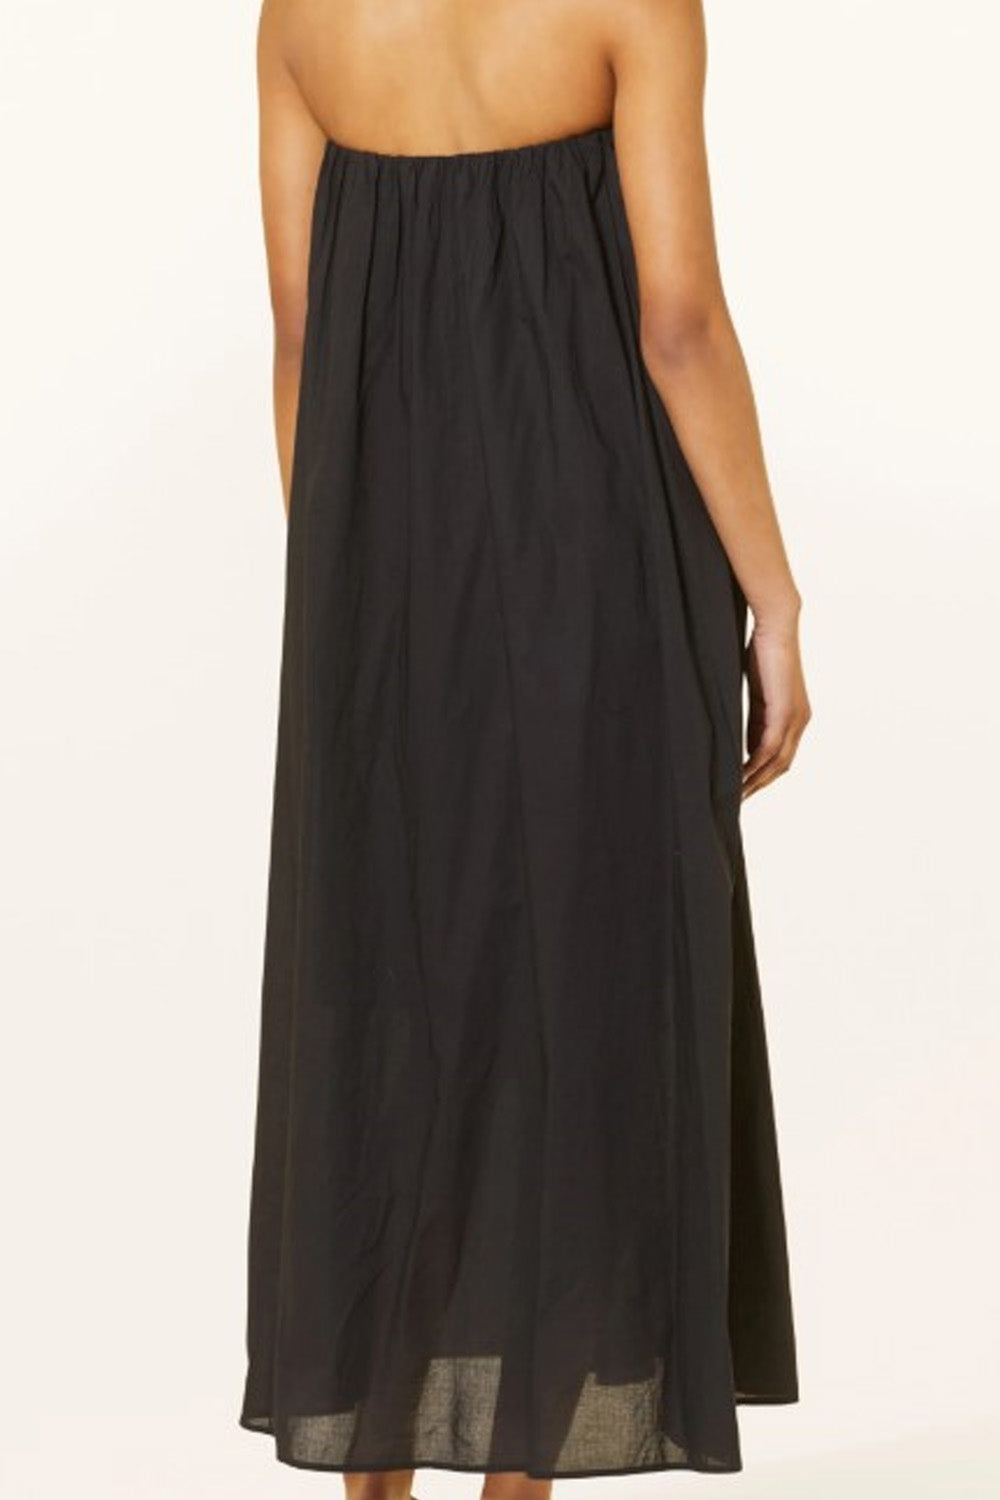 Outback Black Dress